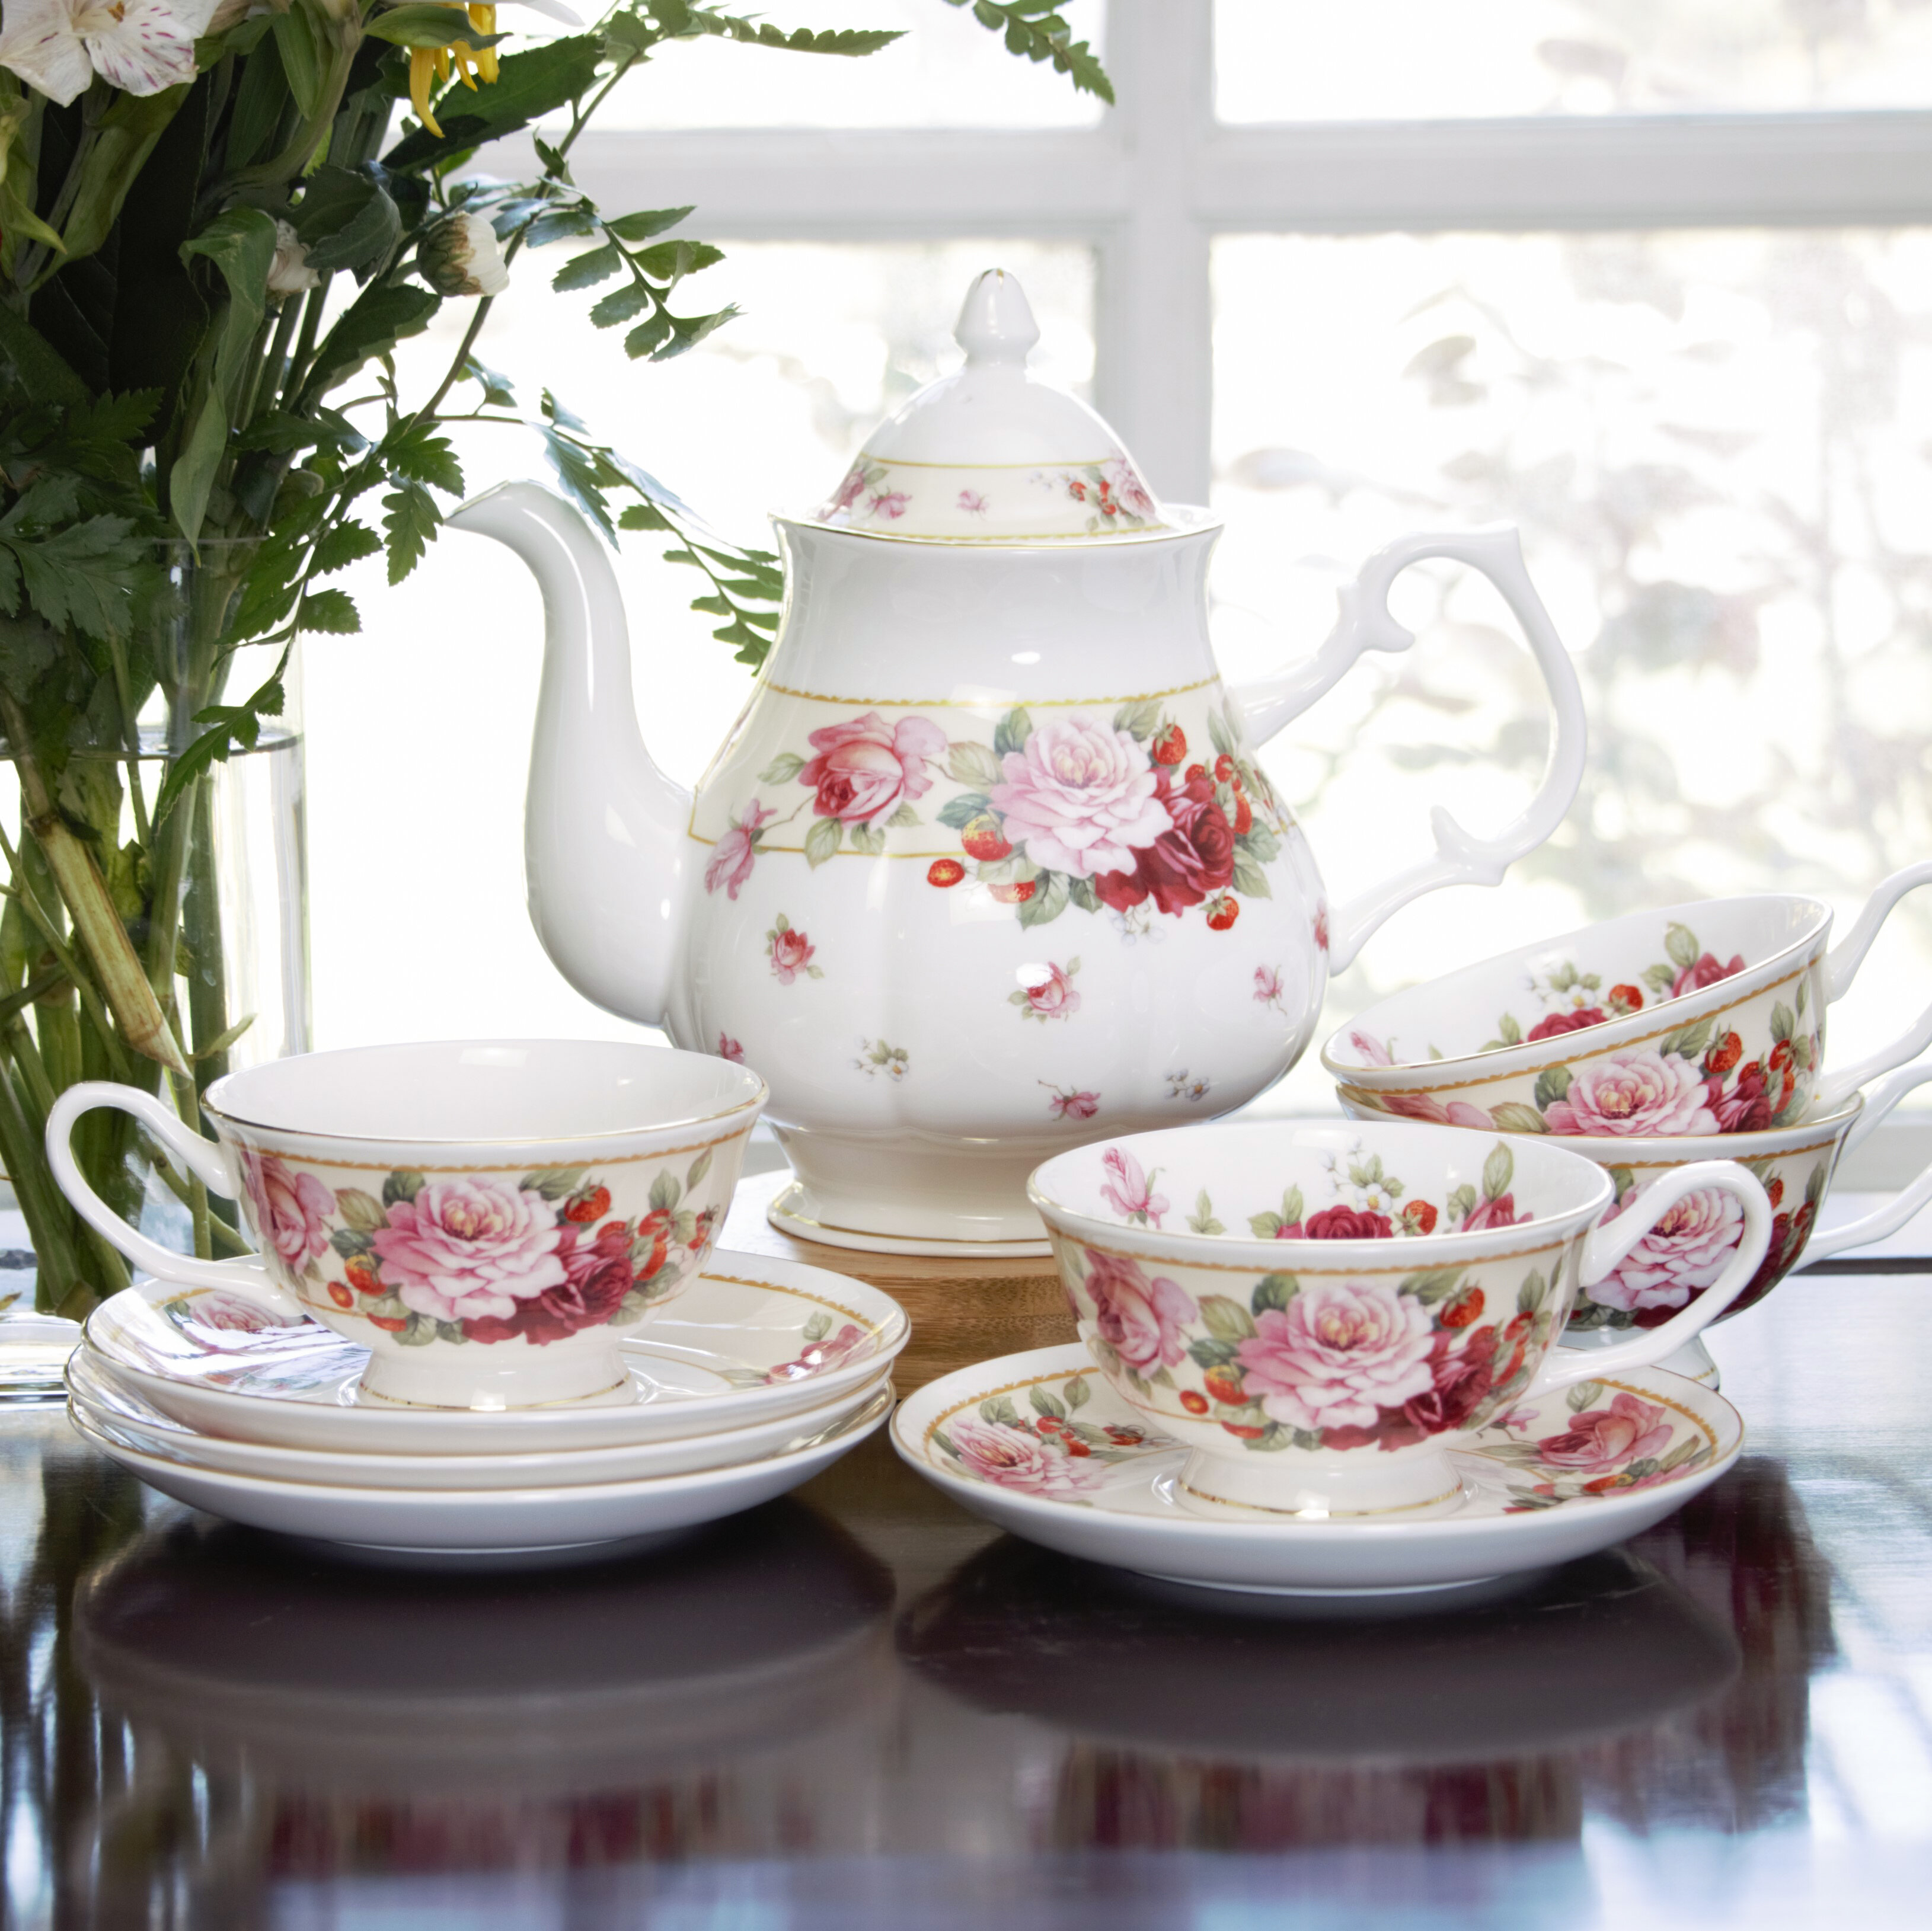 Bone China and Porcelain Tea Sets - The Teapot Shoppe, Inc.